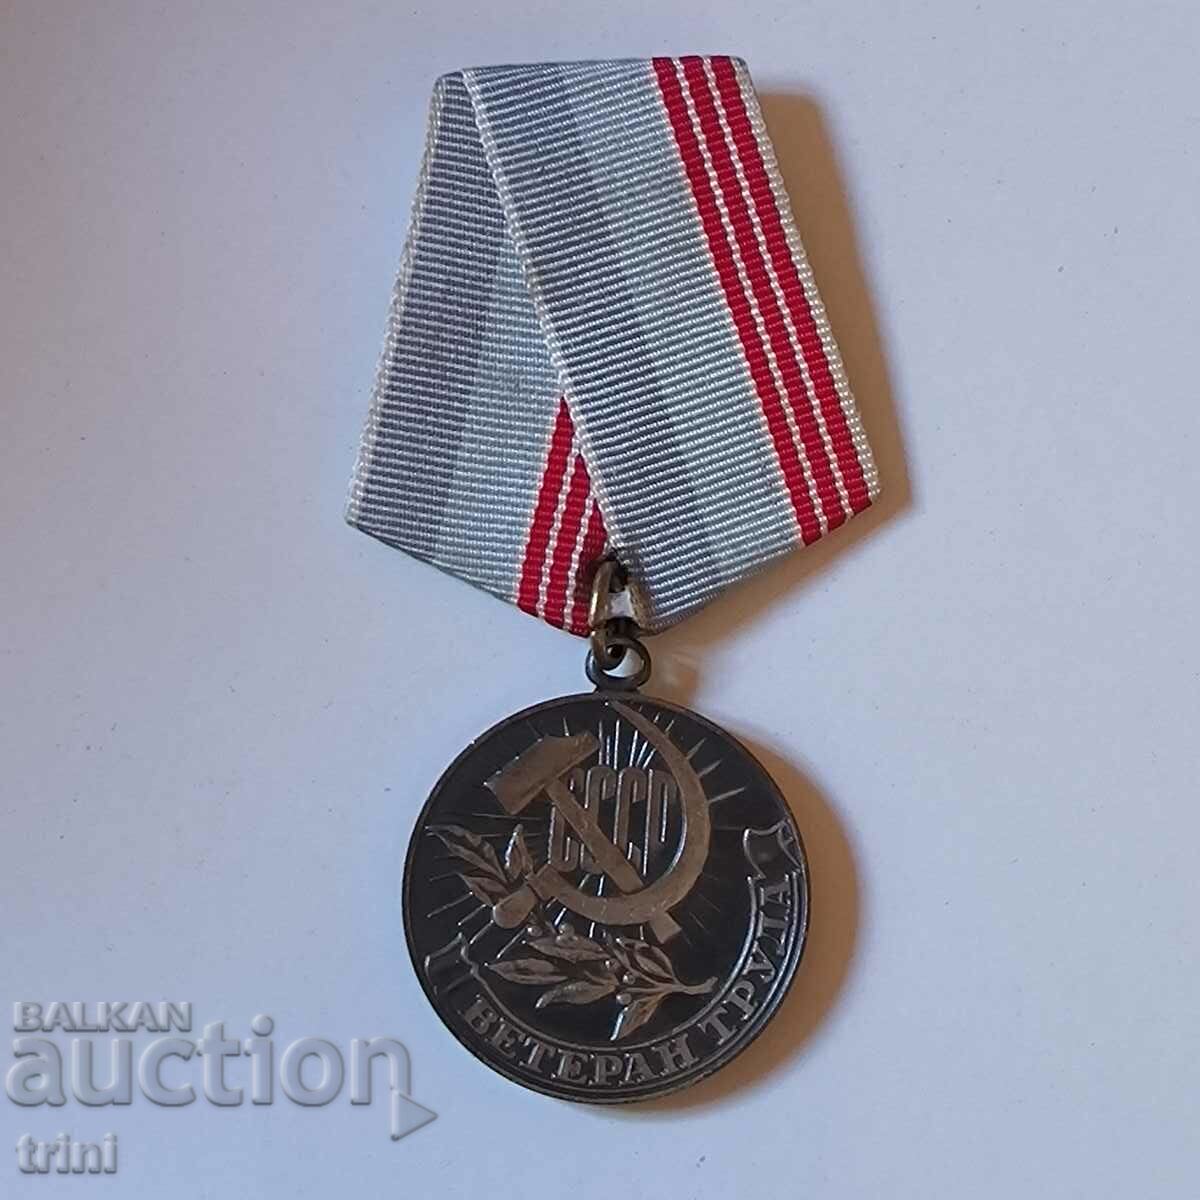 Medalia „Veteran al Muncii” (1974) – mare purtător